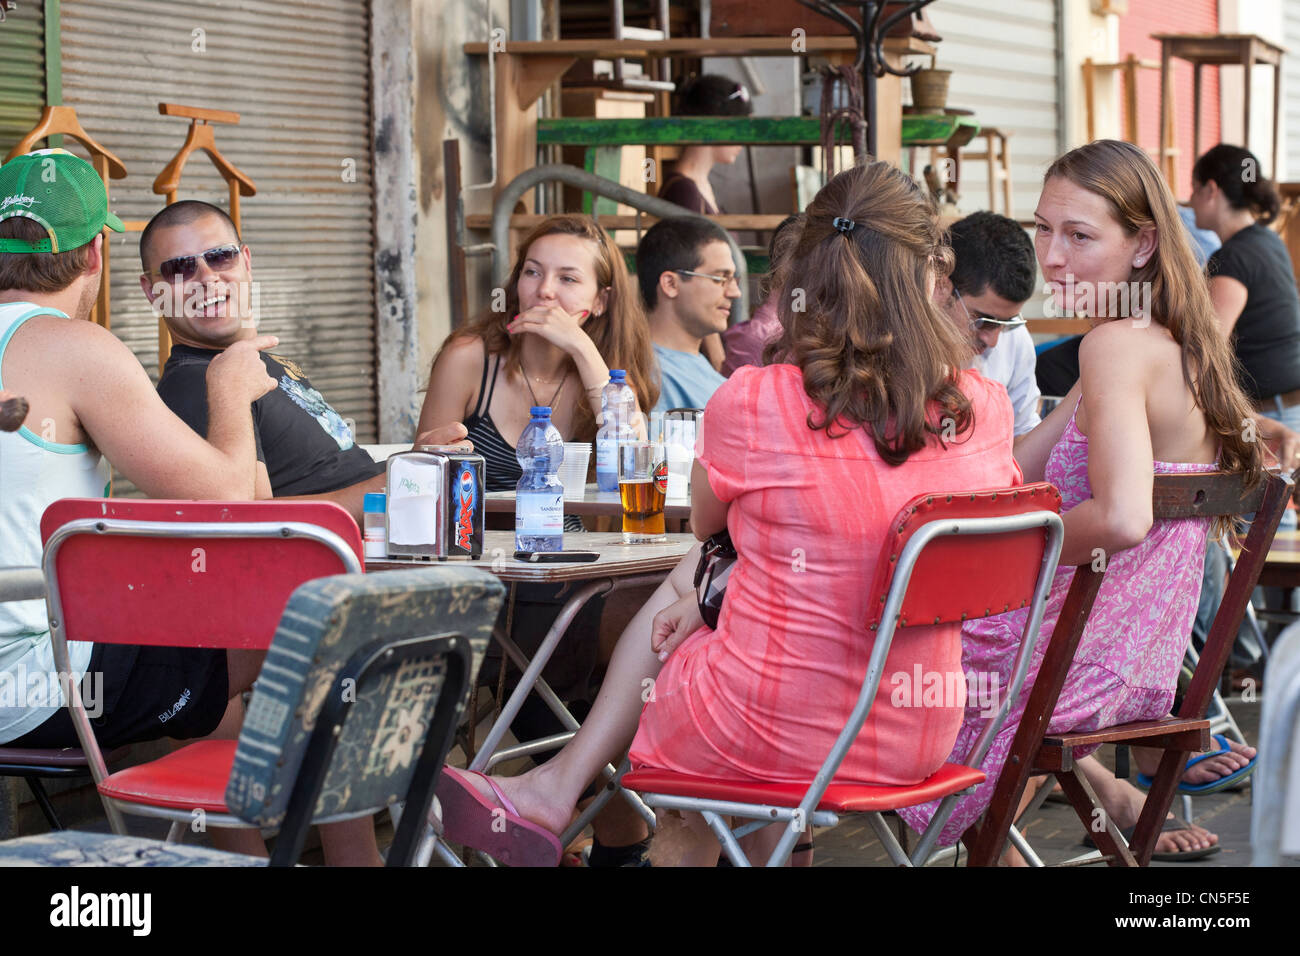 Israele, Tel Aviv, Jaffa, il Rabbino Yohanan Street, cafe nel mercato delle pulci Foto Stock